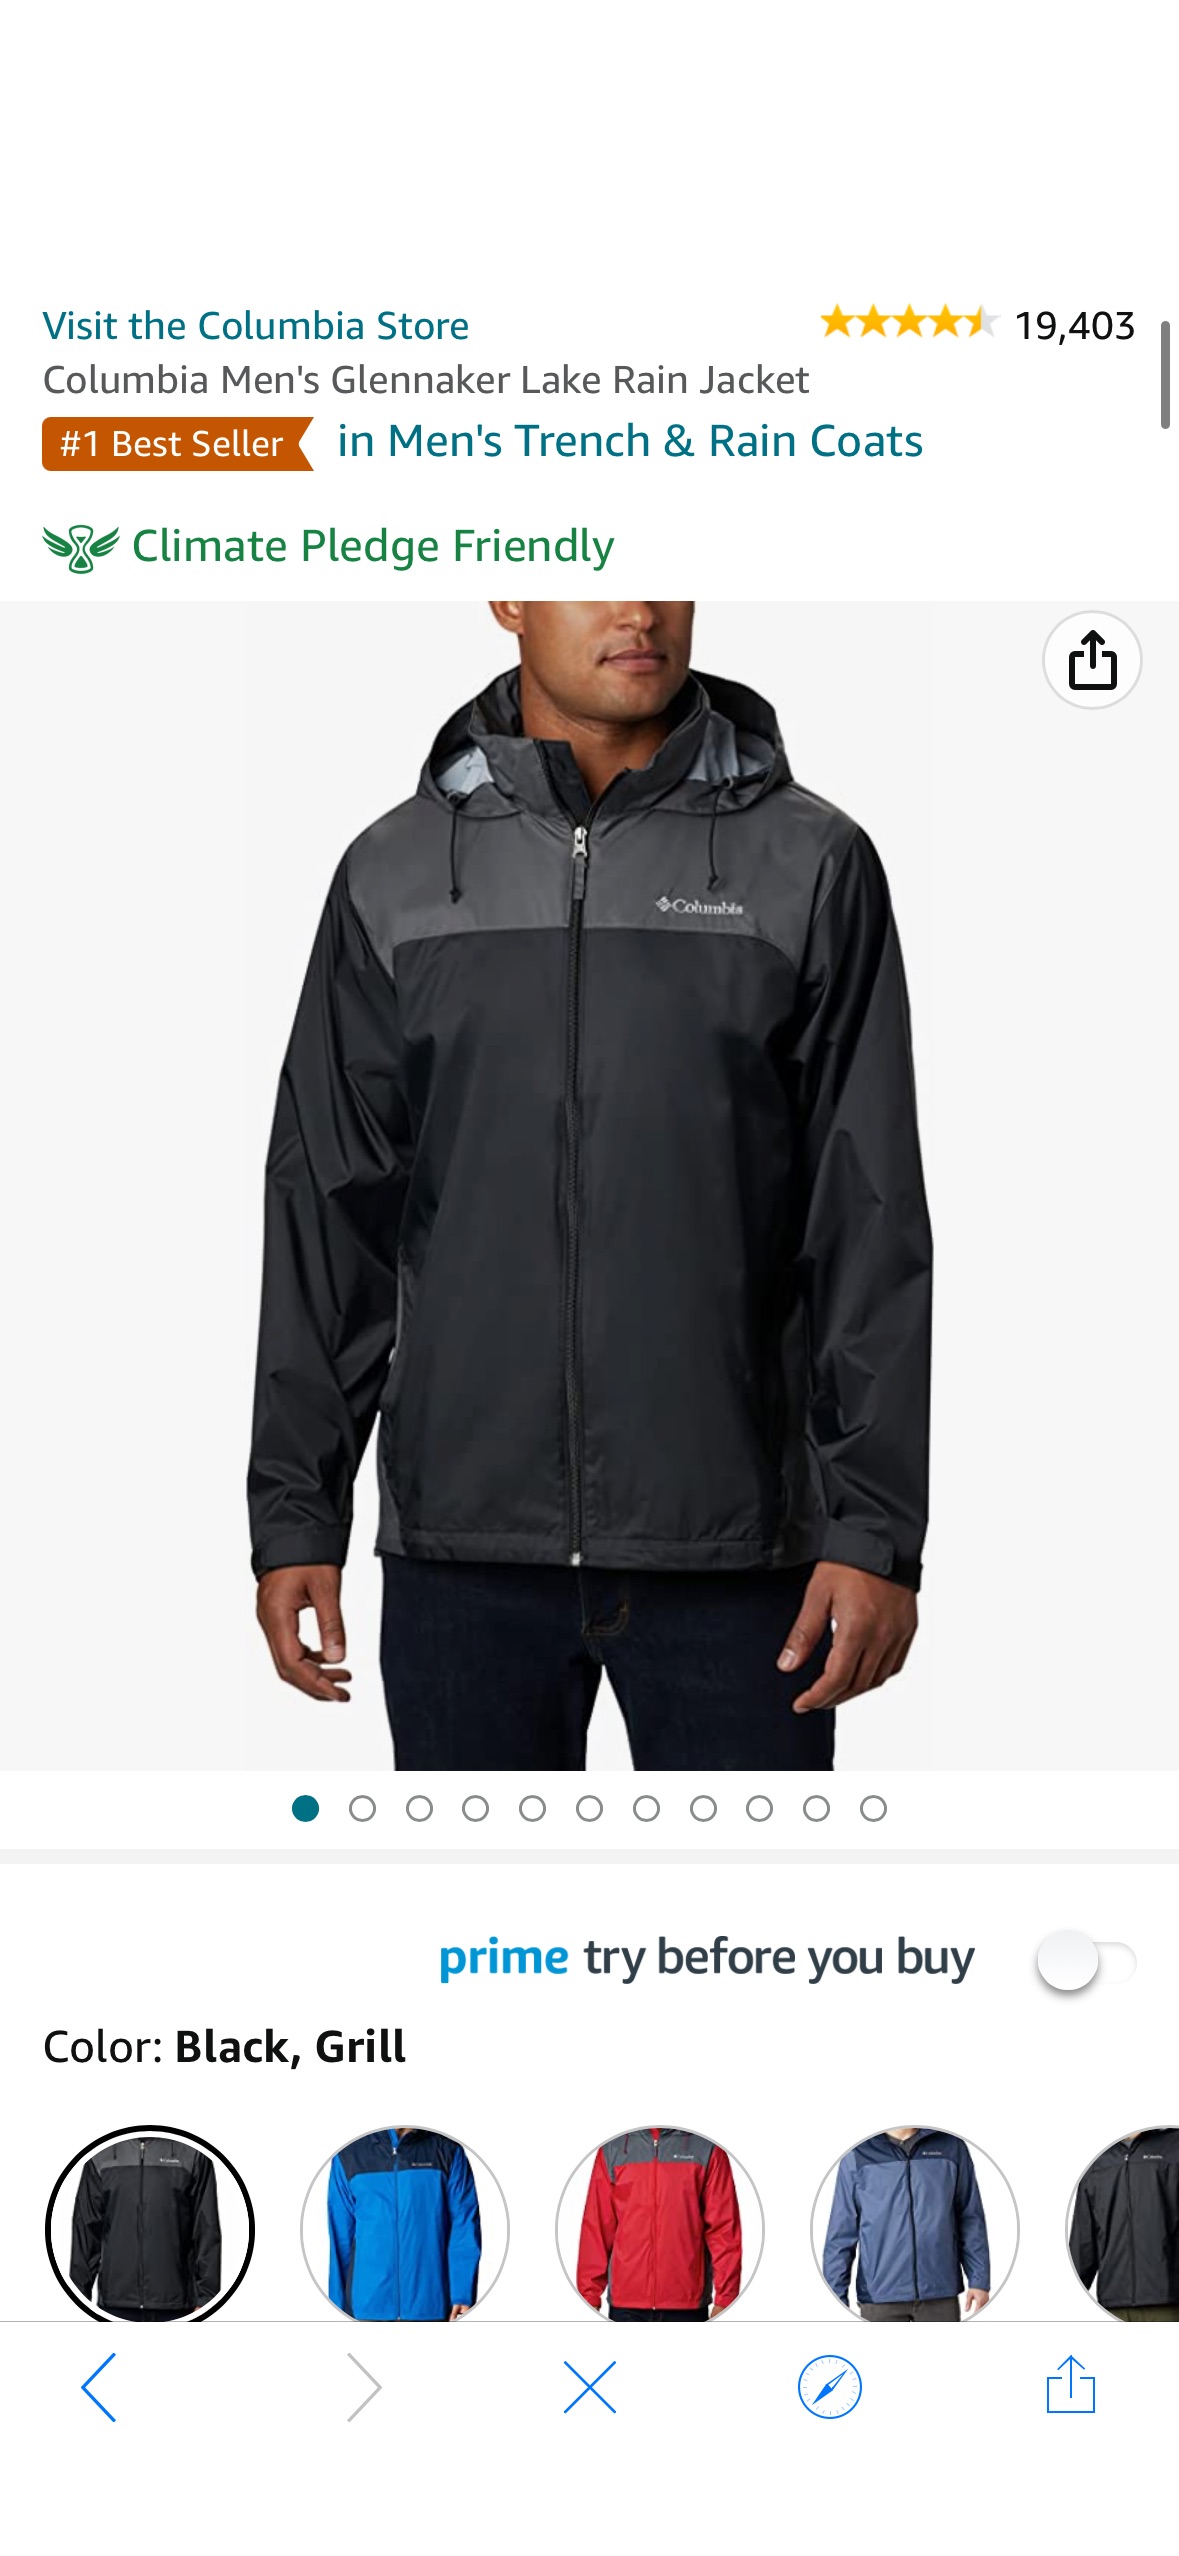 Amazon.com: Columbia Men's Glennaker Lake Rain Jacket, Black/Grill, Large : Columbia: Clothing, Shoes & Jewelry夹克